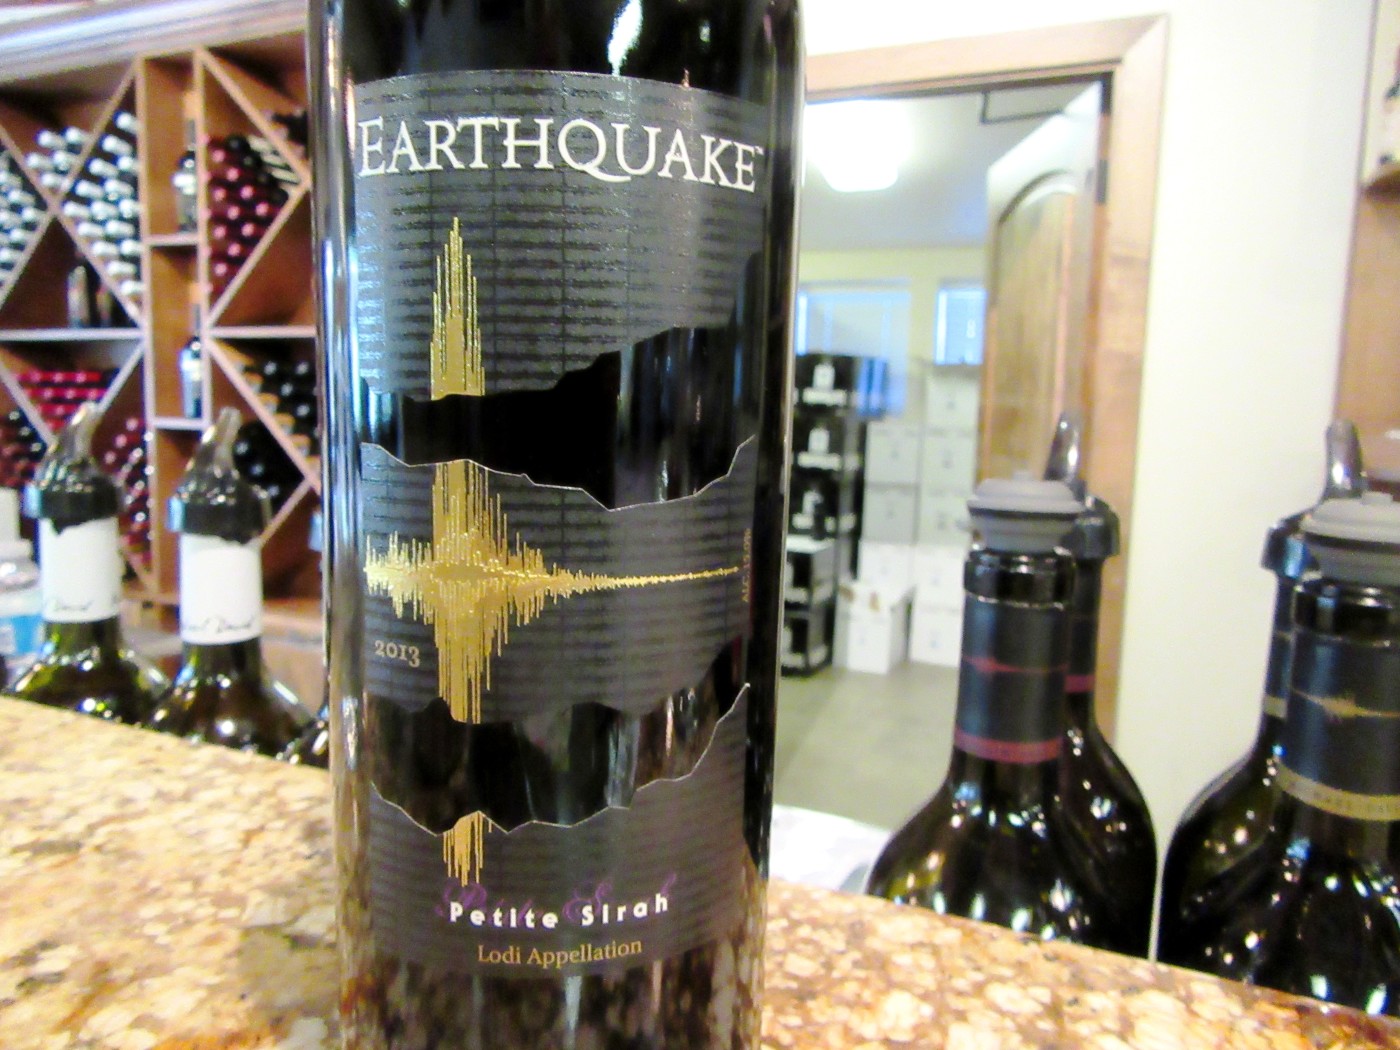 Michael David Winery, Earthquake Petite Sirah 2013, Lodi, California, Wine Casual